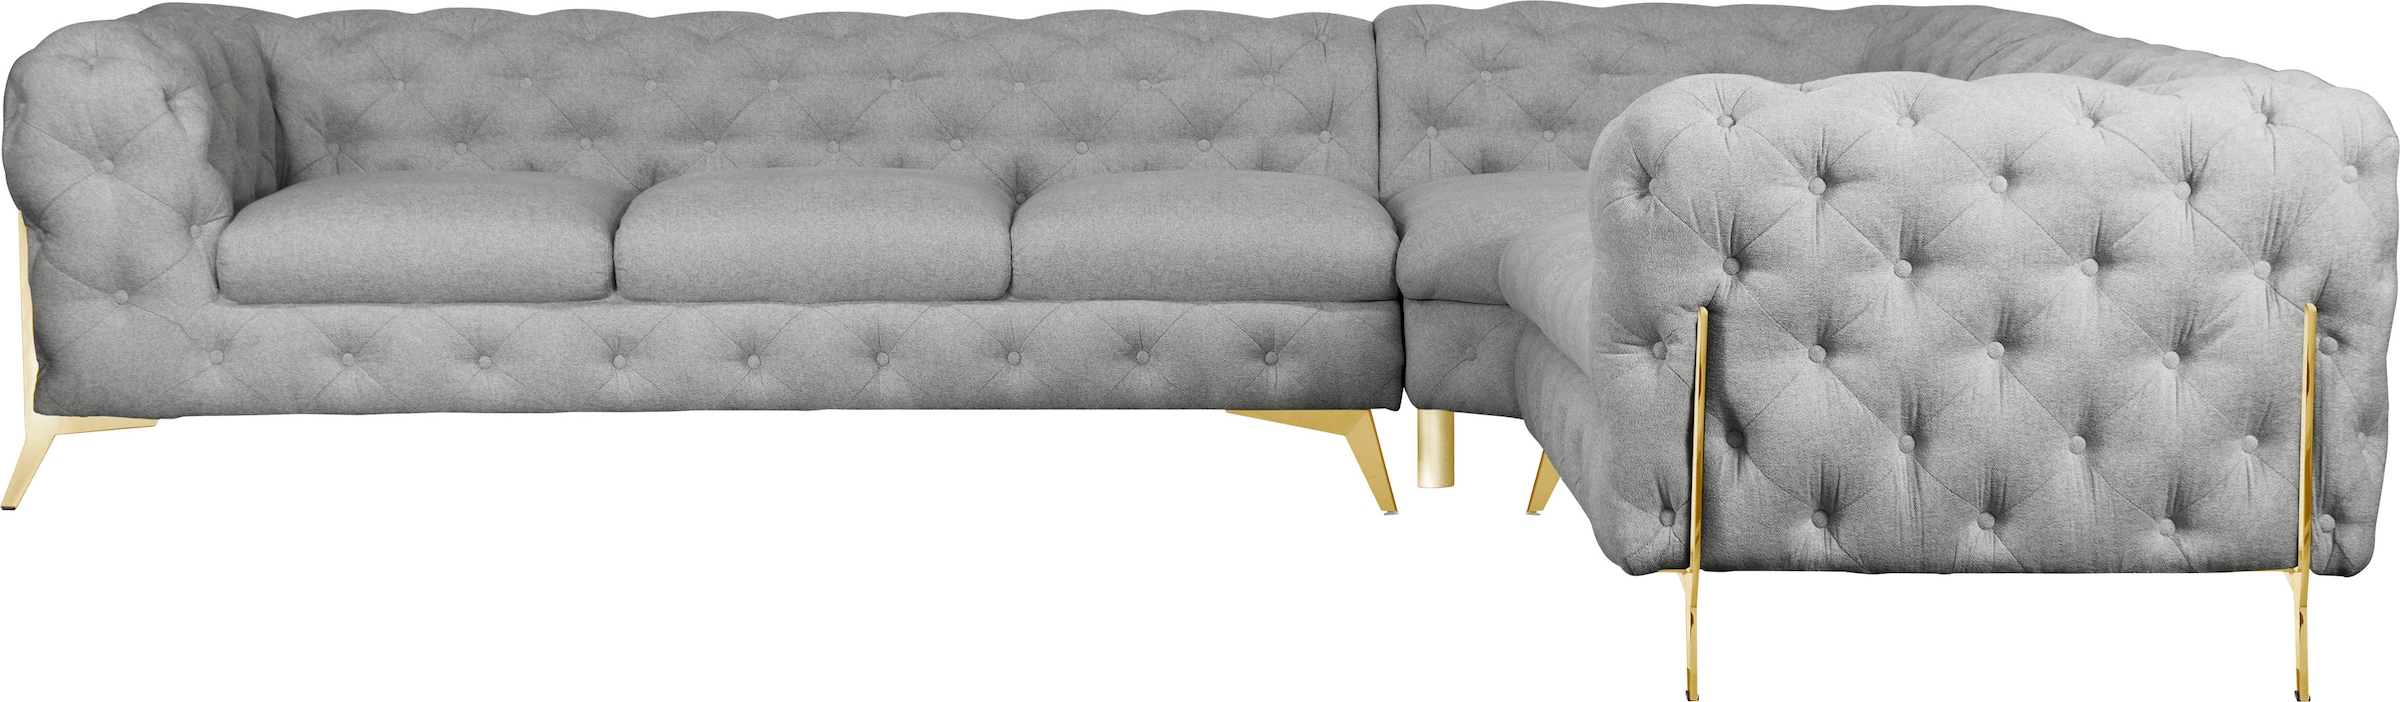 Chesterfield-Sofa »Amaury L-Form«, großes Ecksofa, Chesterfield-Optik, Breite 323 cm,...